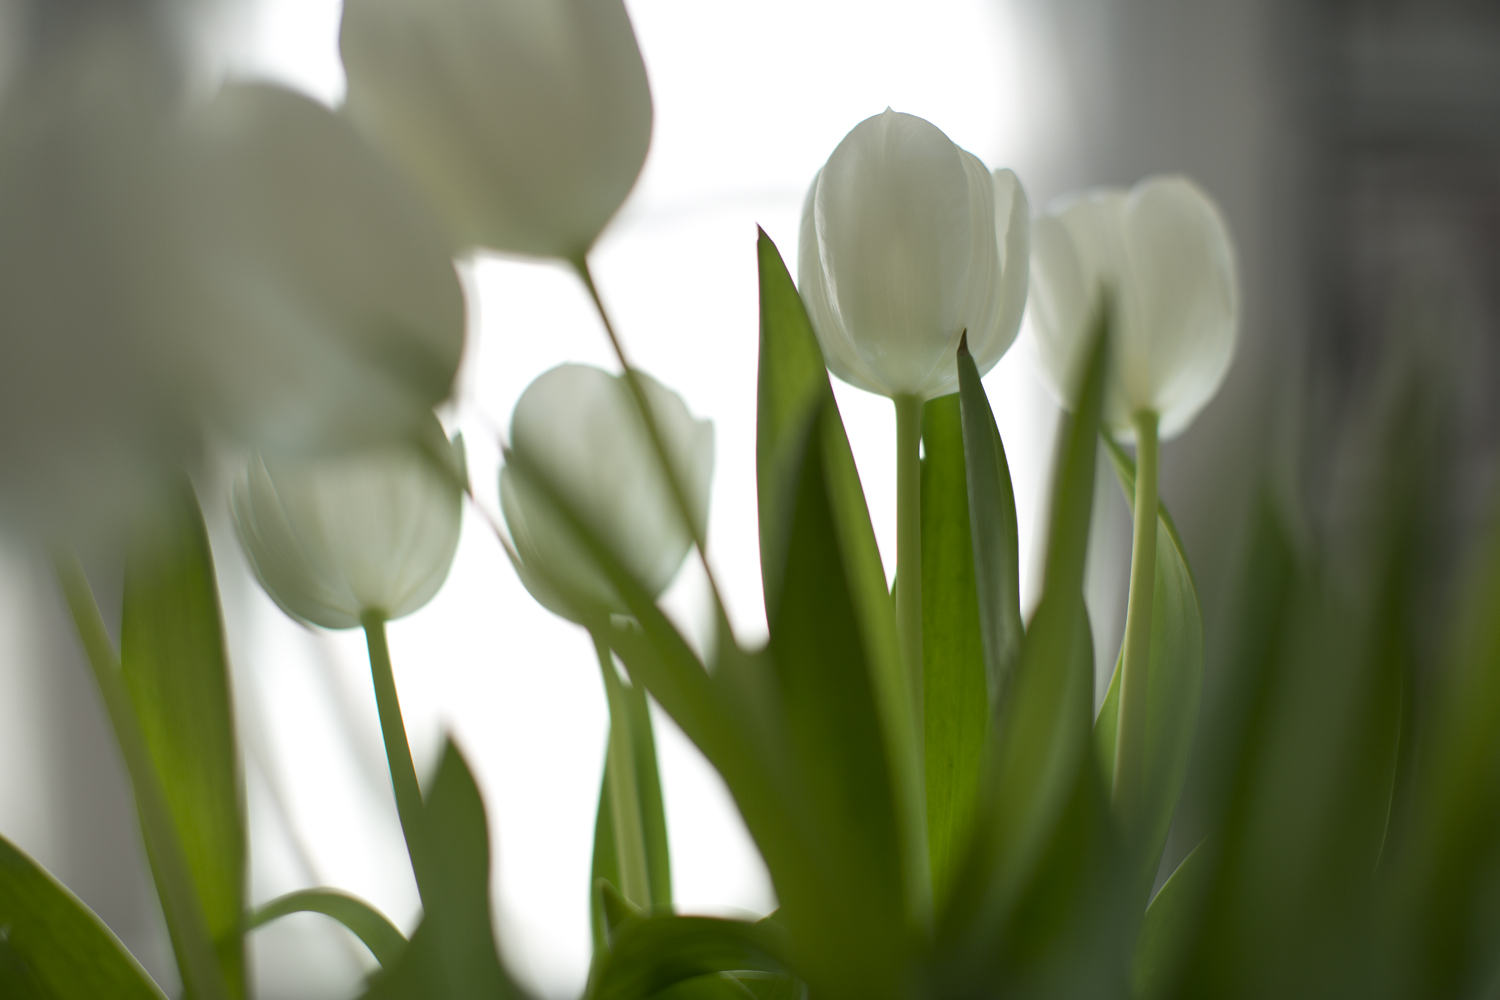 amys_white_tulips_03-21-16_9524.jpg